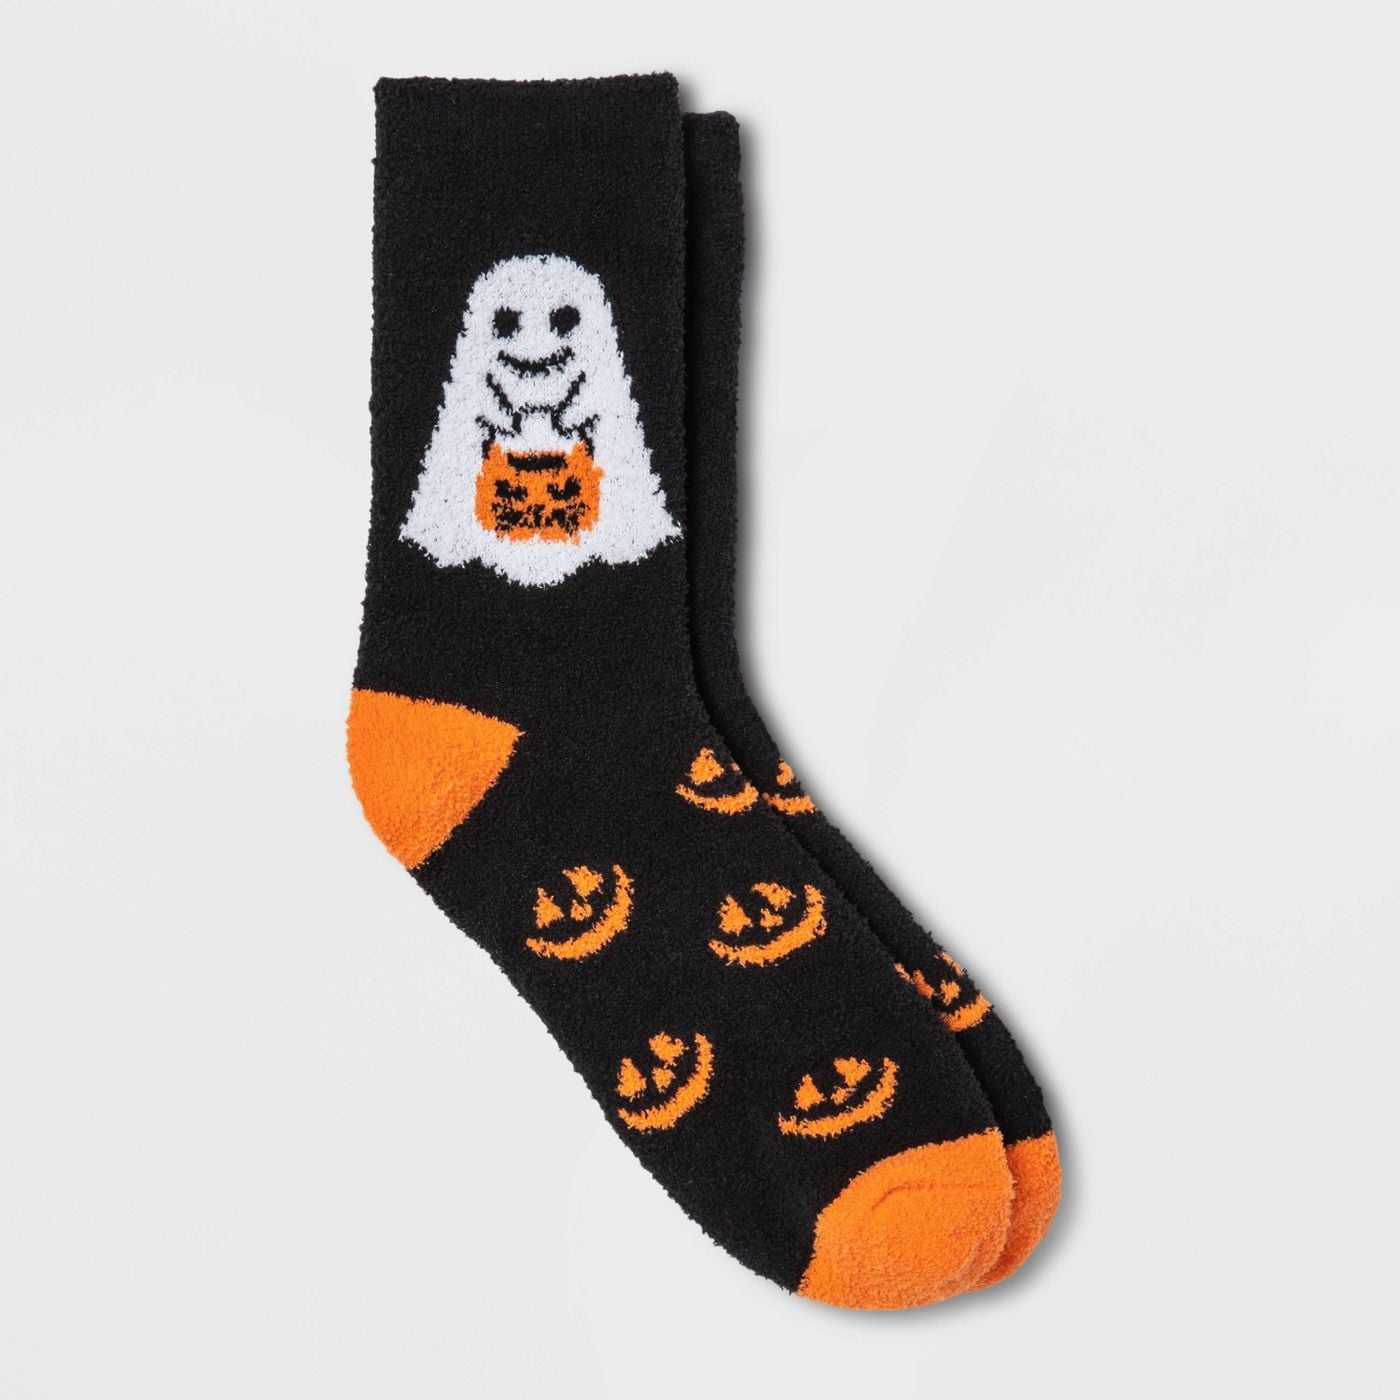 SVVOOD Unisex Halloween Ghost Sport Highsocks Stocking Socks 